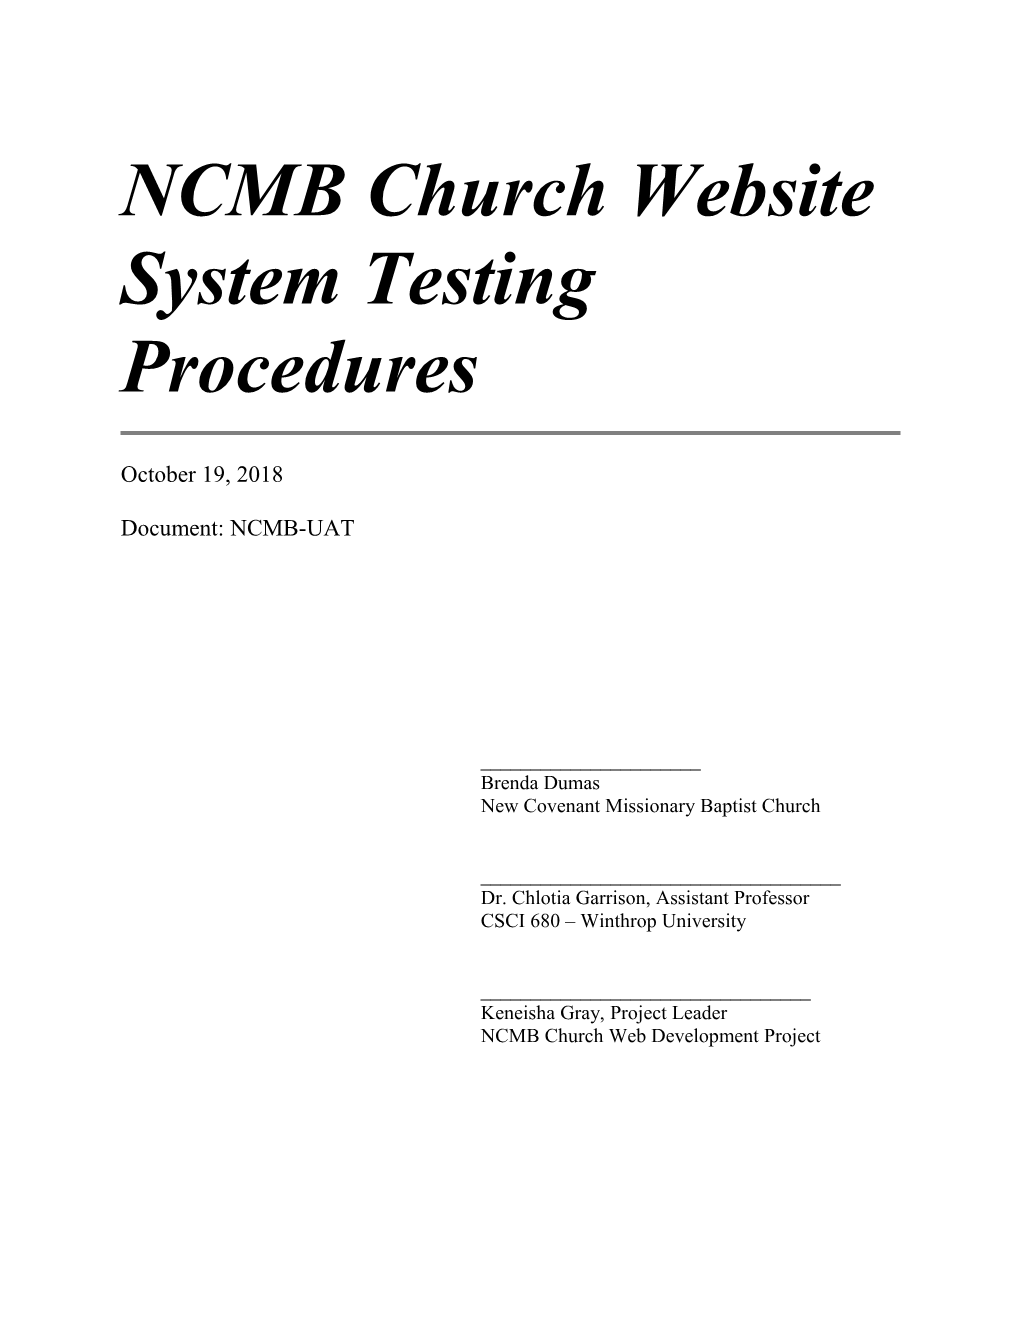 NCMB Church Website System Testing Procedures